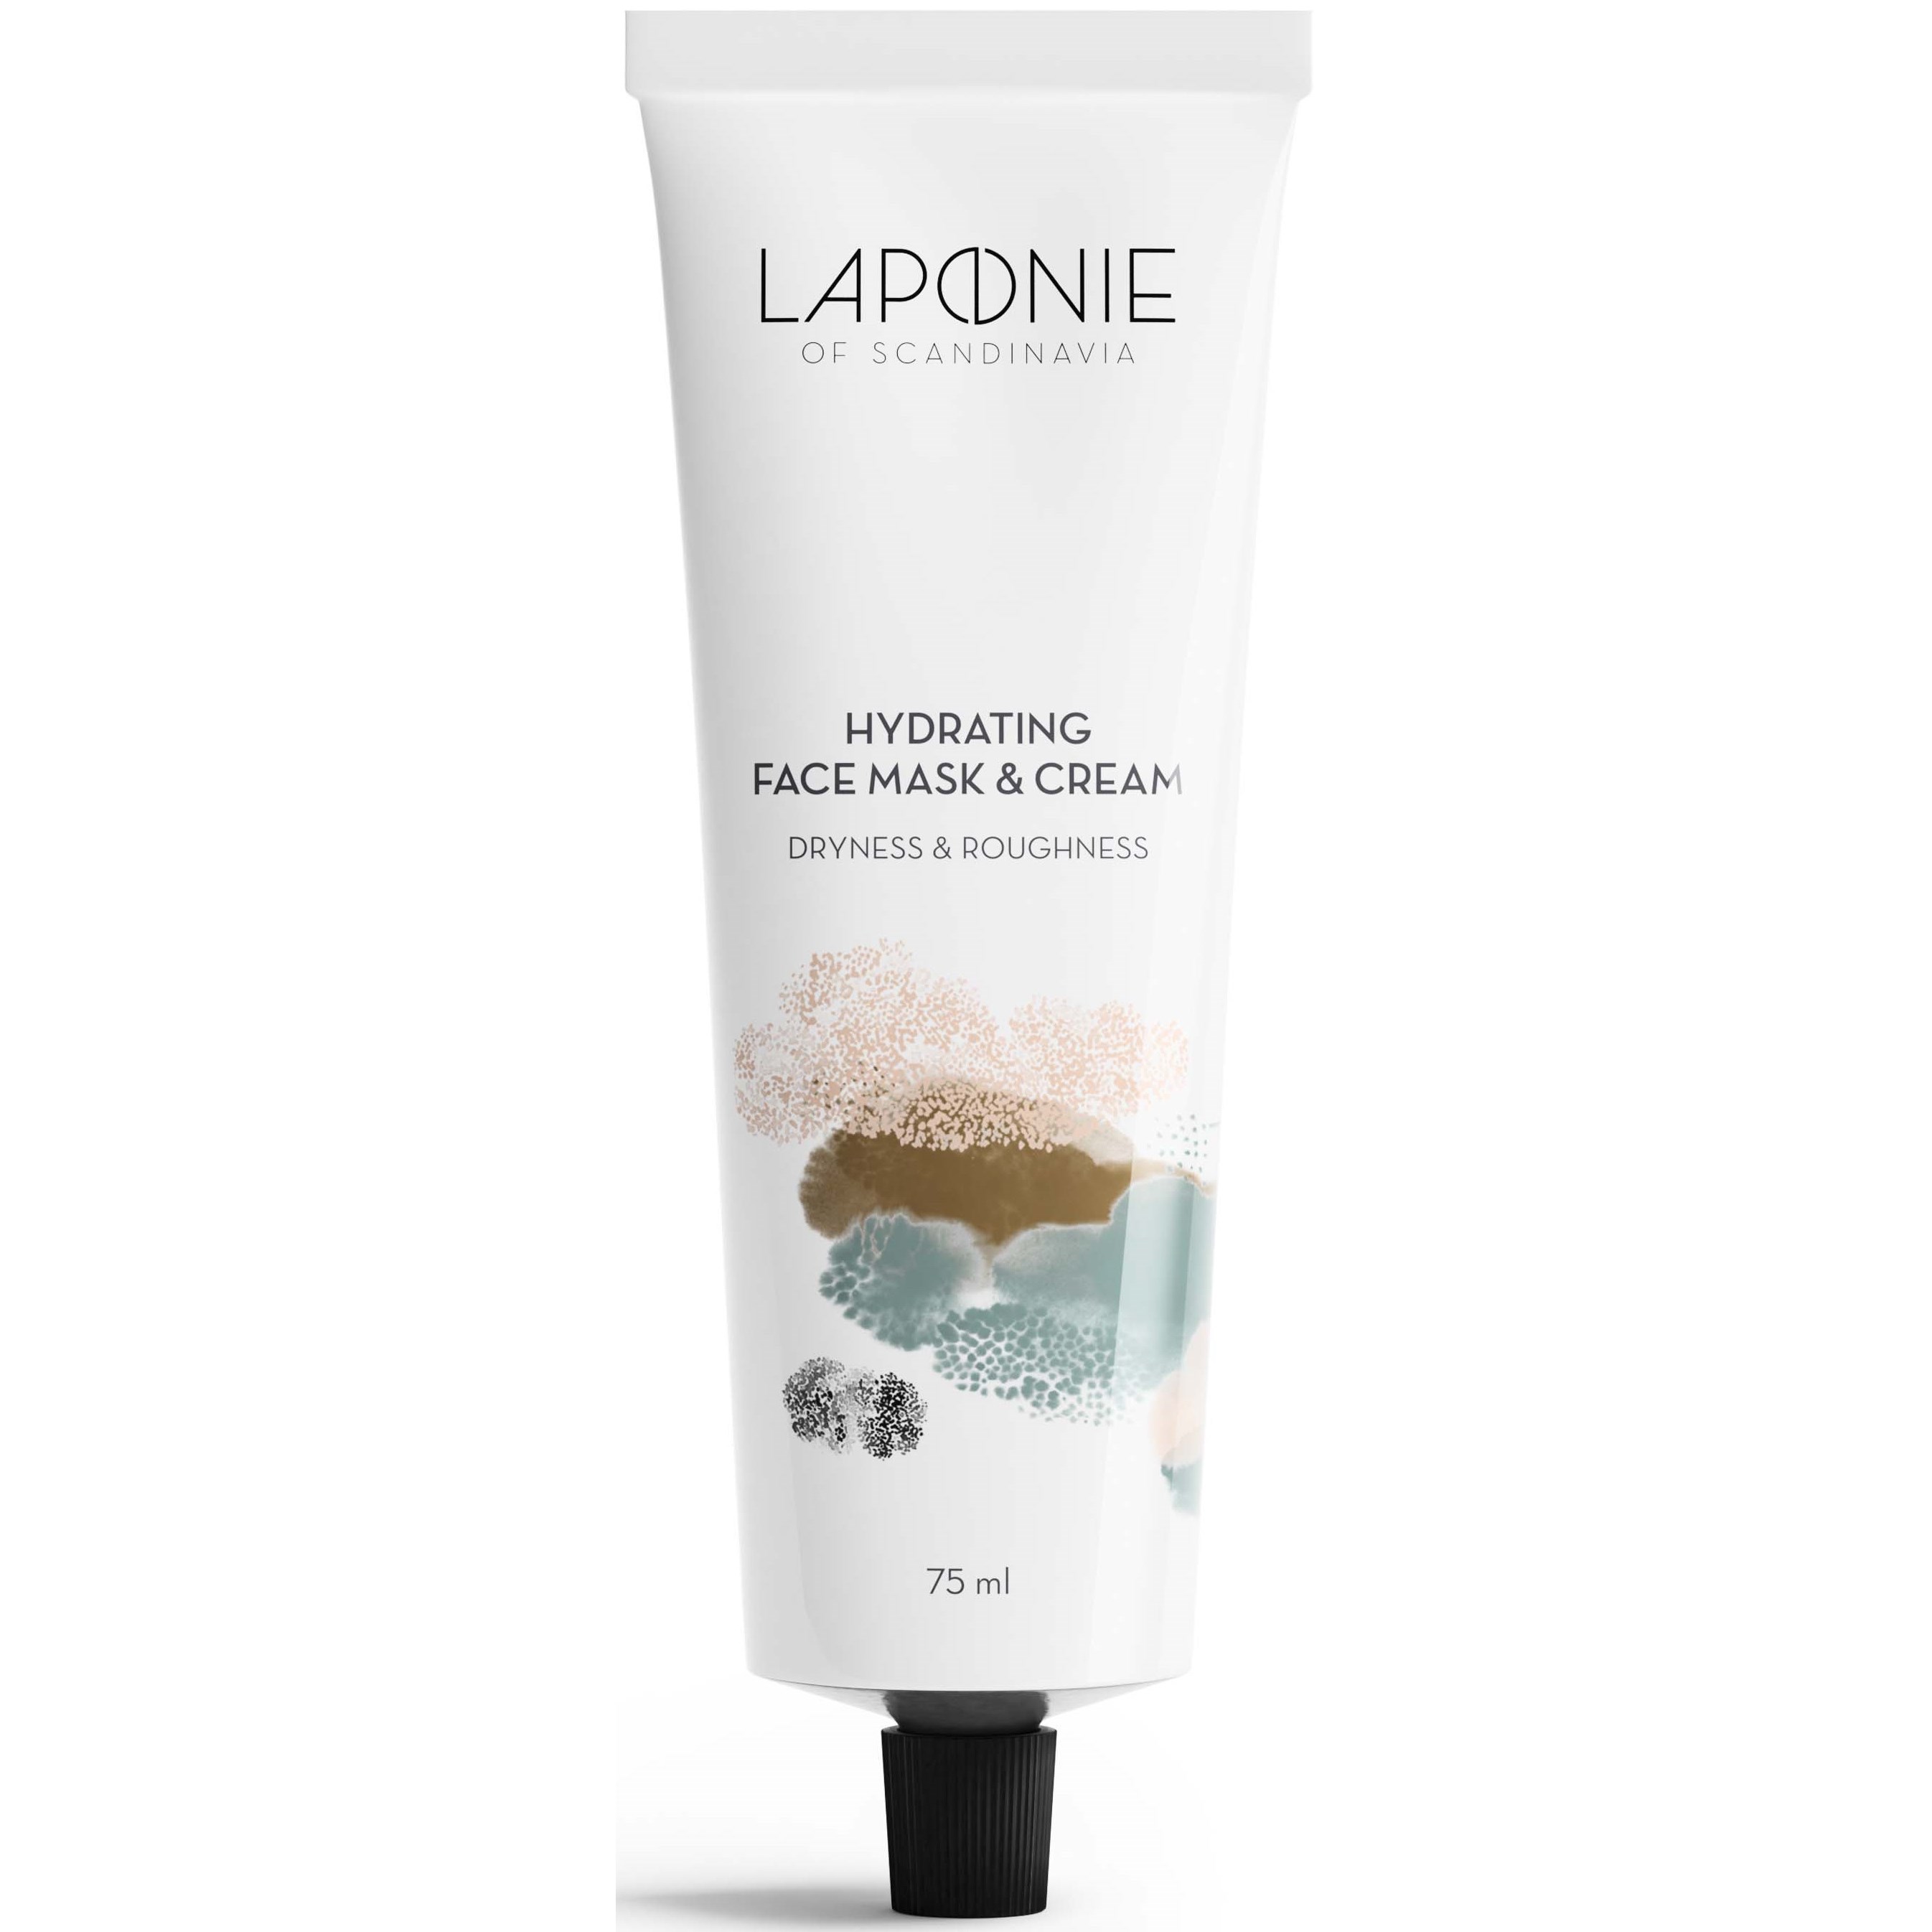 Laponie of Scandinavia Hydrating Face Mask & Cream 75 ml